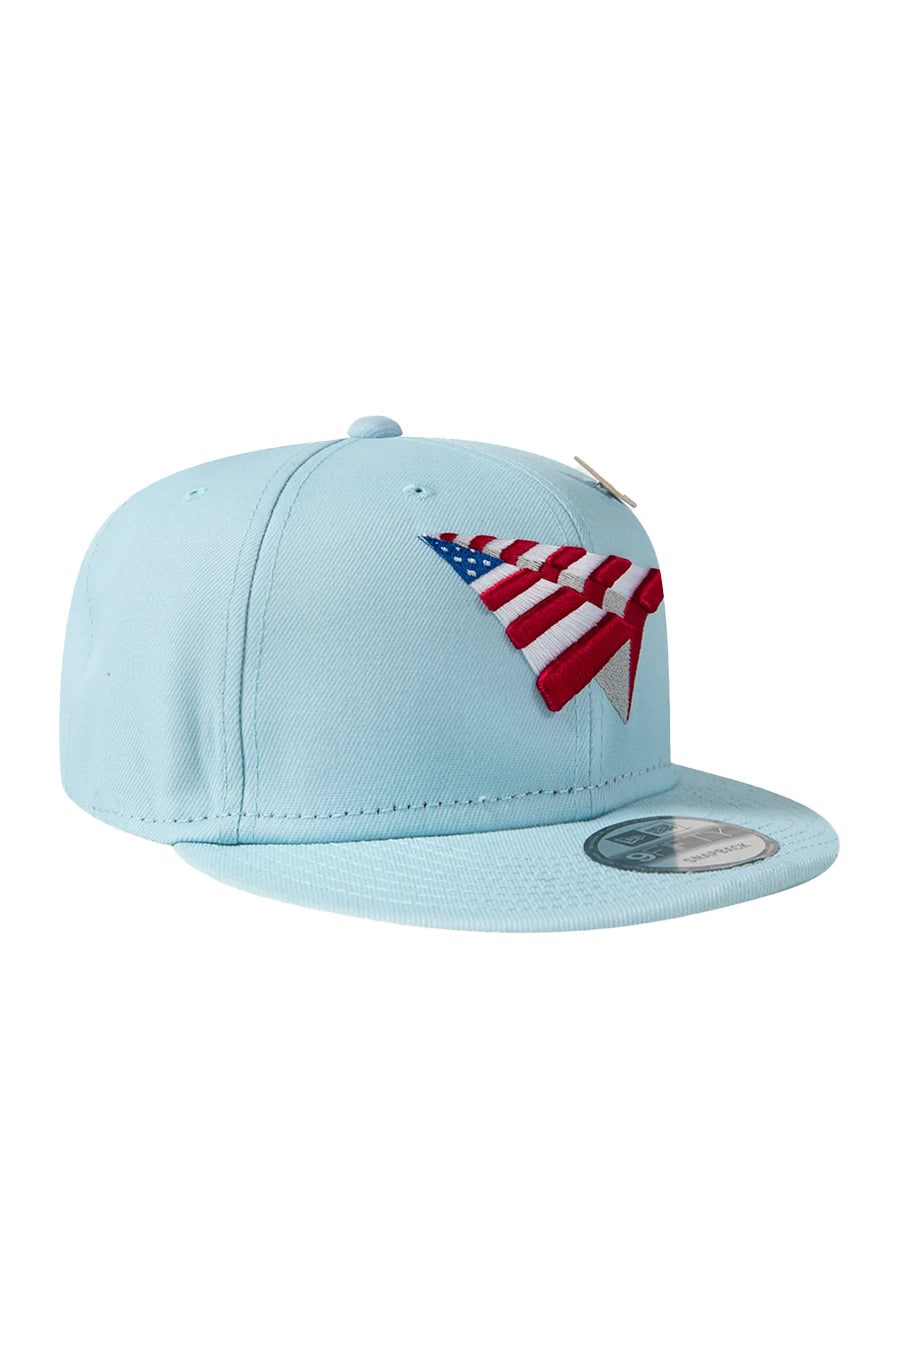 American Dream Crown 9Fifty Snap-Back Hat - Powder Blue